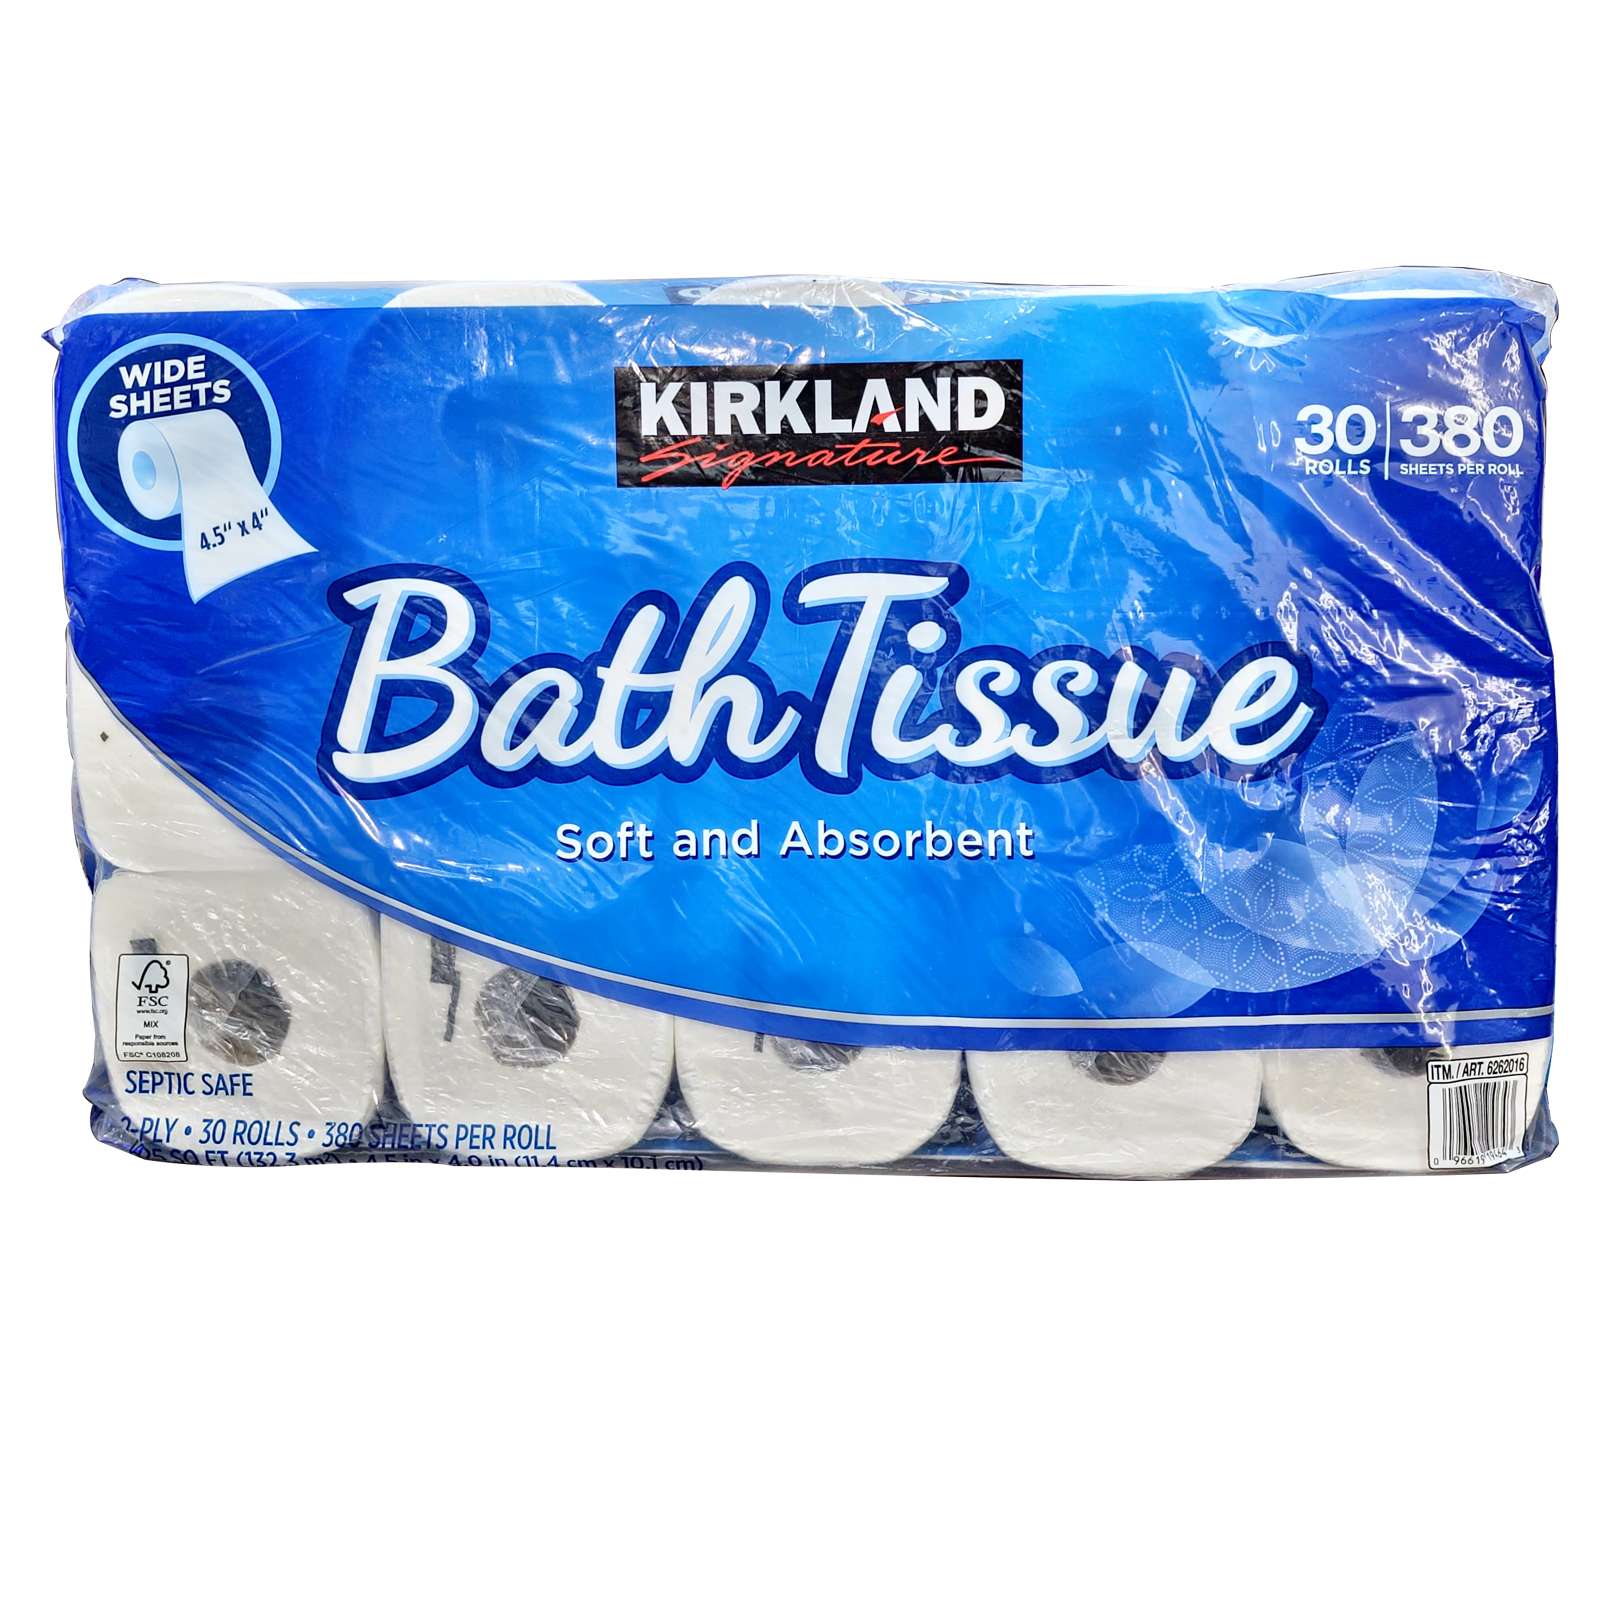 BATH TISSUE PREMIUM 2 PLY - 380 SHEETS SOFT & ABSORBENT KIRKLAND SIGNATURE ( 5 X 6 ROLLS )